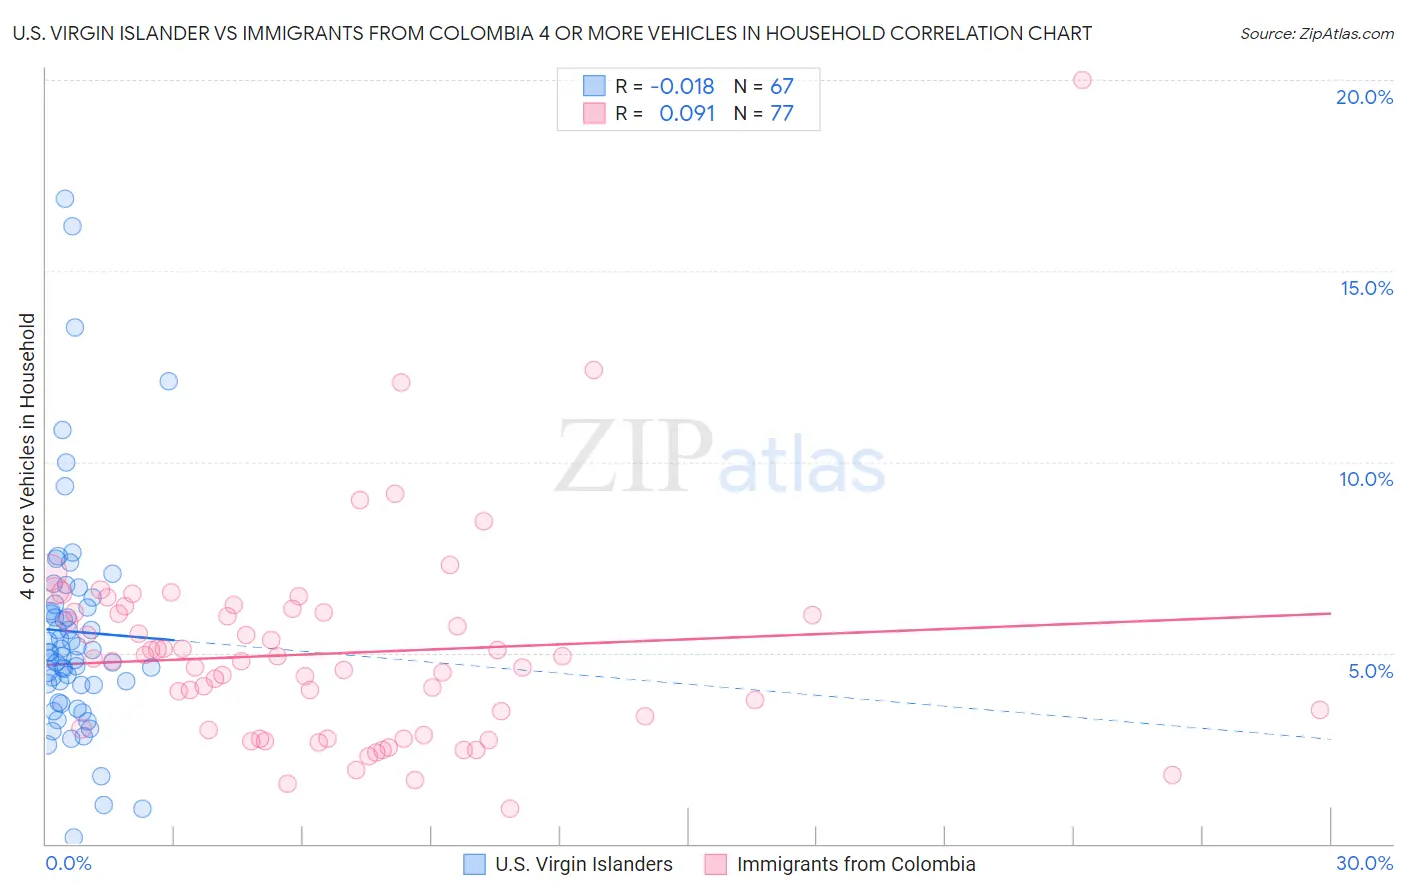 U.S. Virgin Islander vs Immigrants from Colombia 4 or more Vehicles in Household